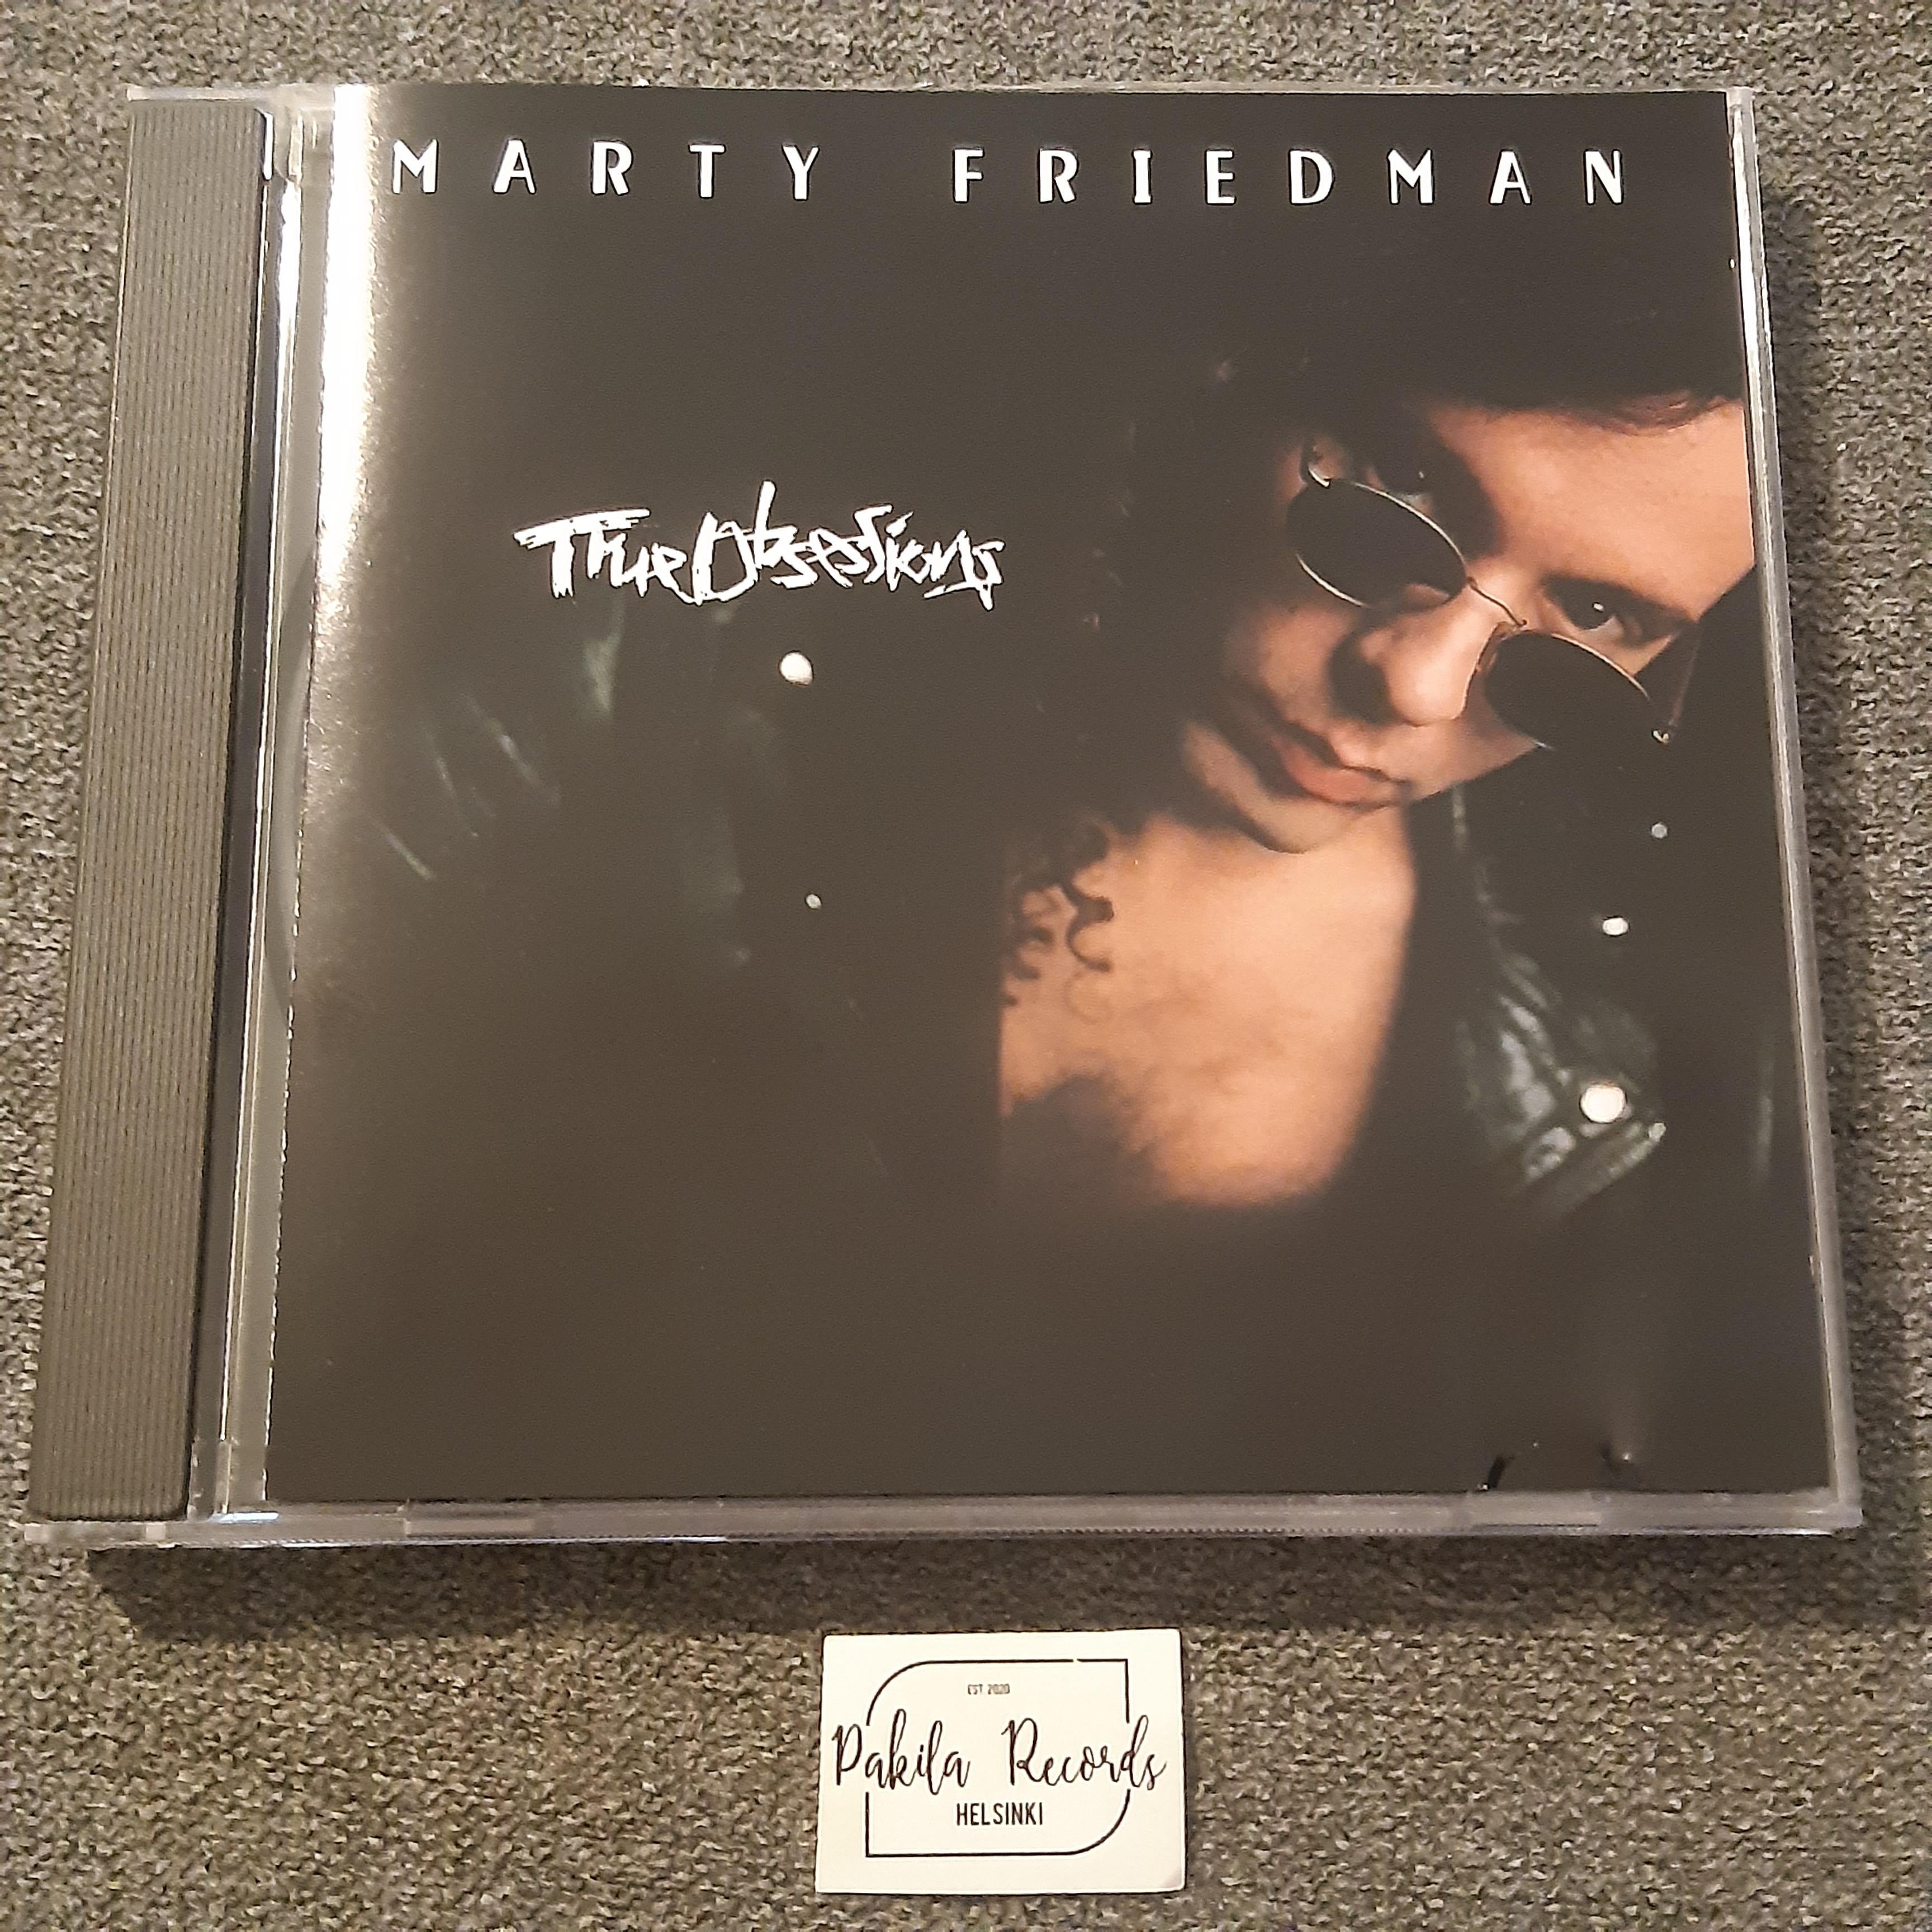 Marty Friedman - True Obsessions - CD (käytetty)